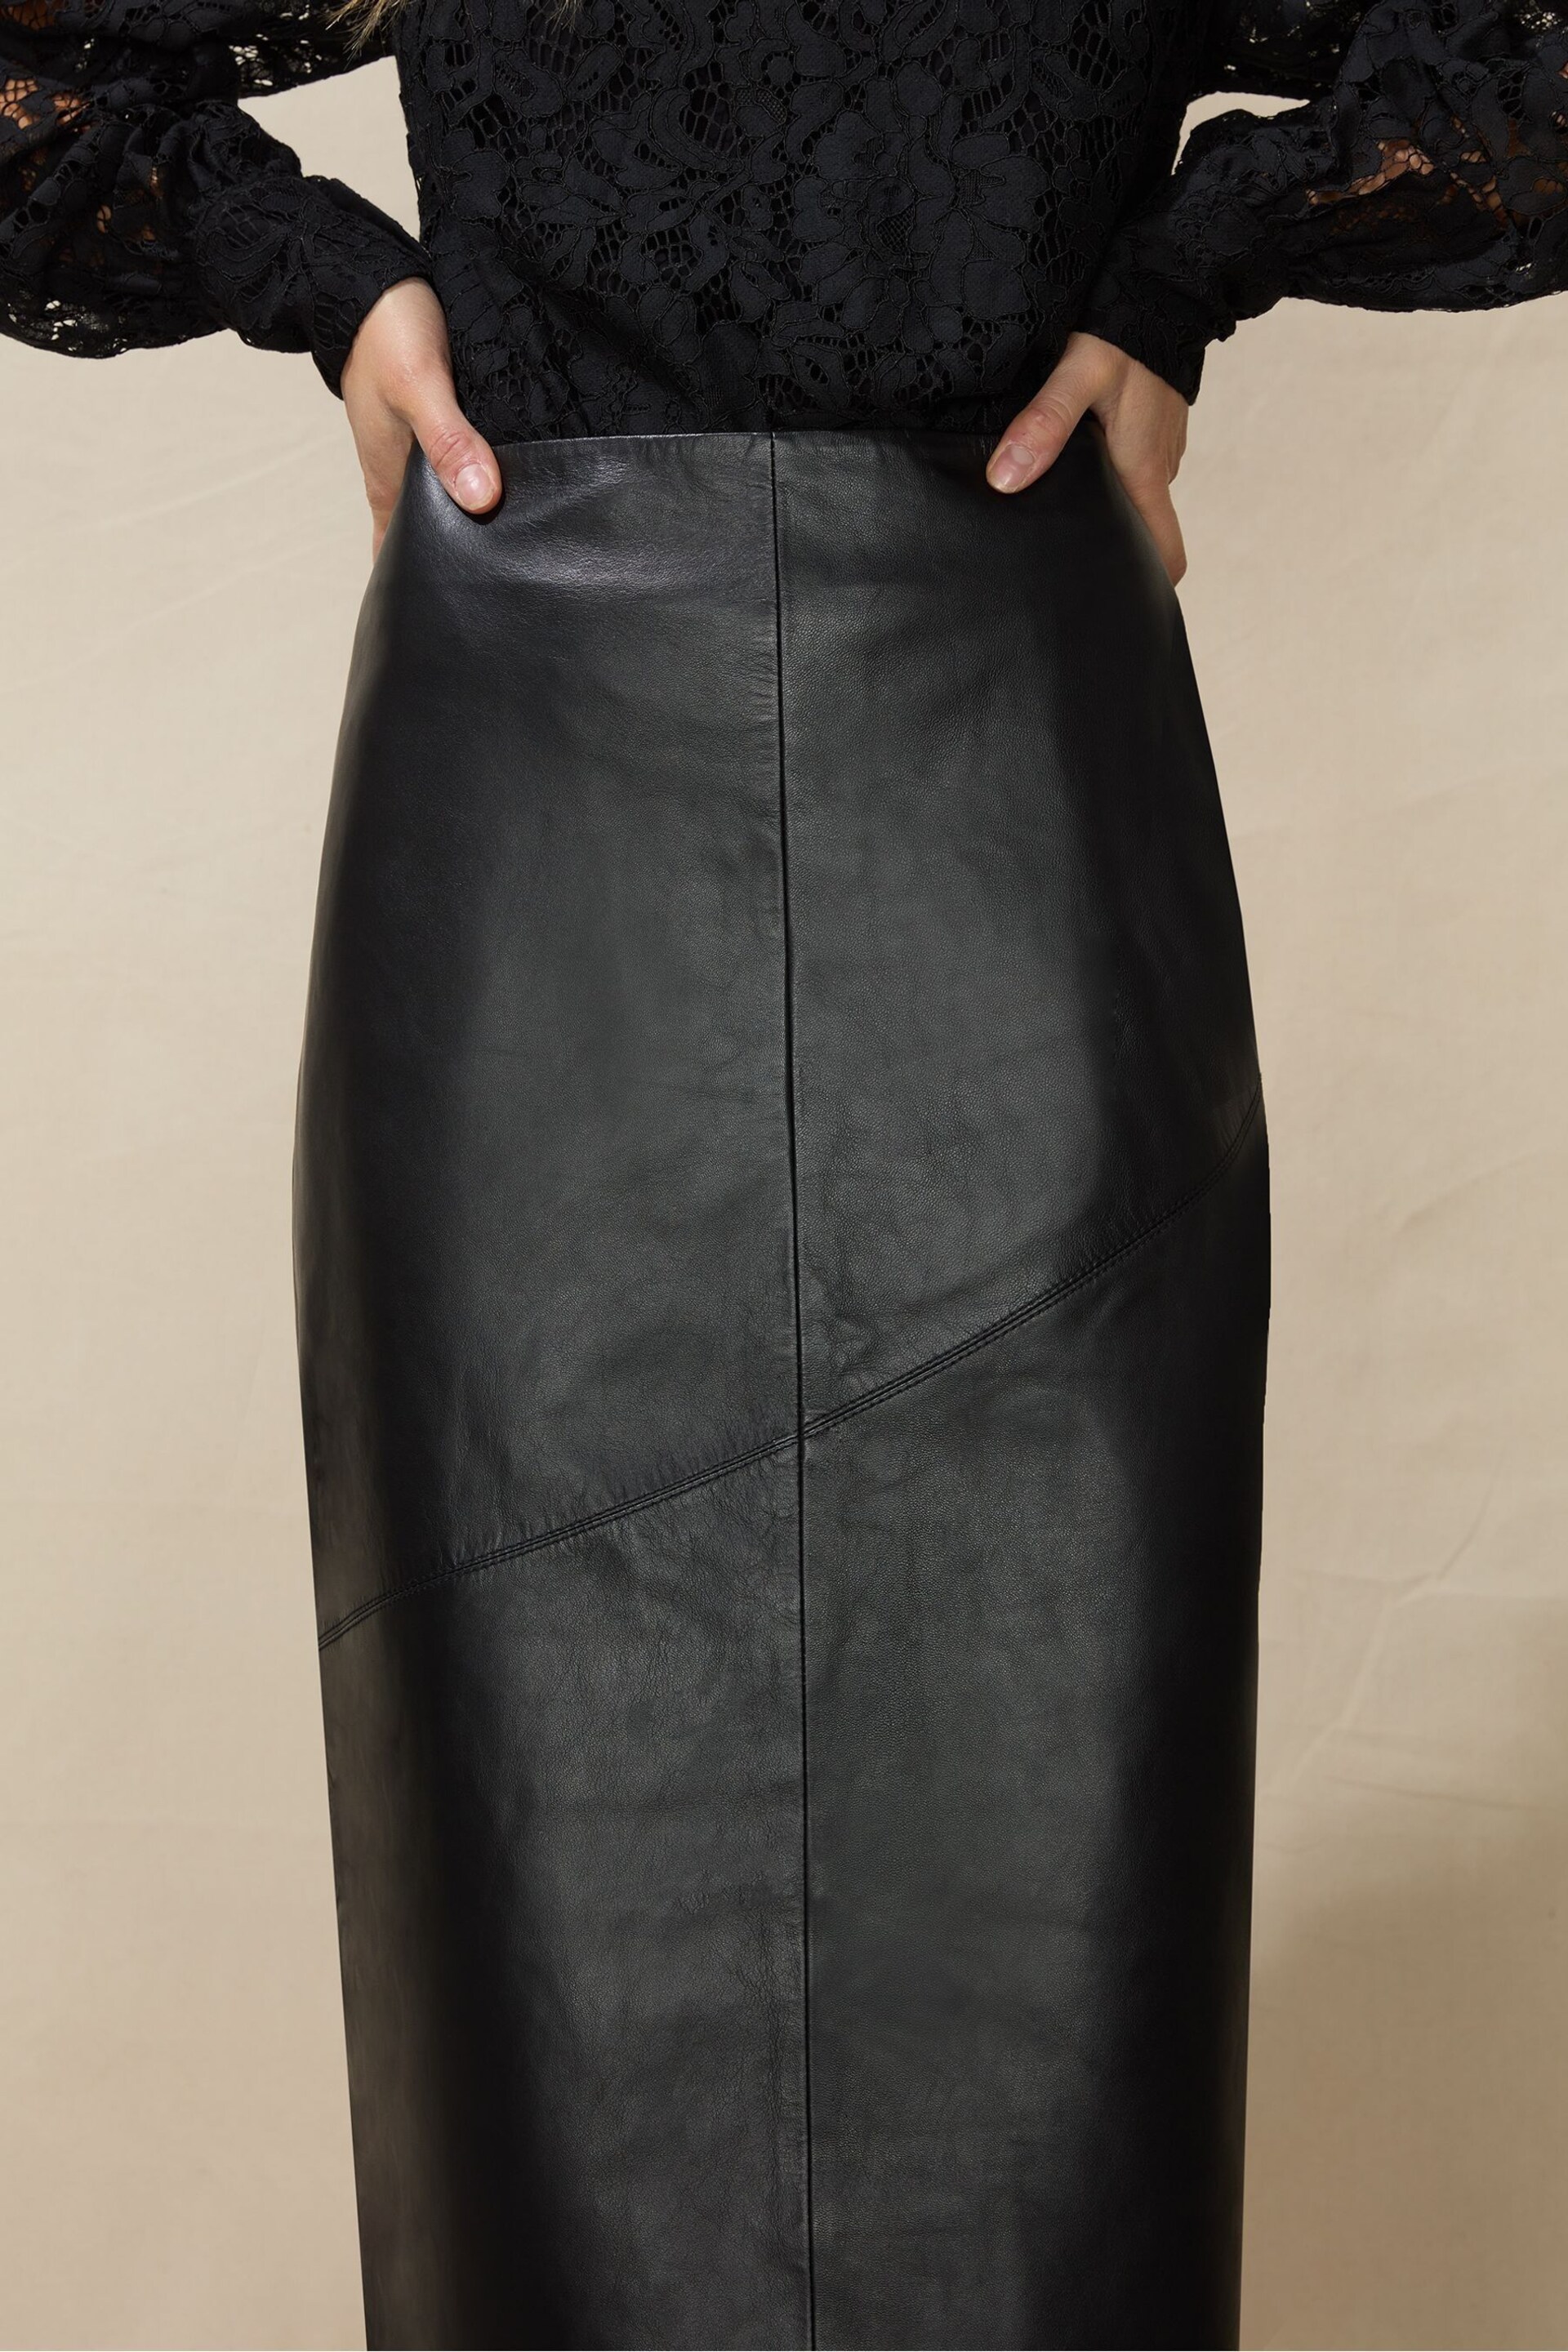 Ro&Zo Leather Midi Skirt - Image 4 of 5